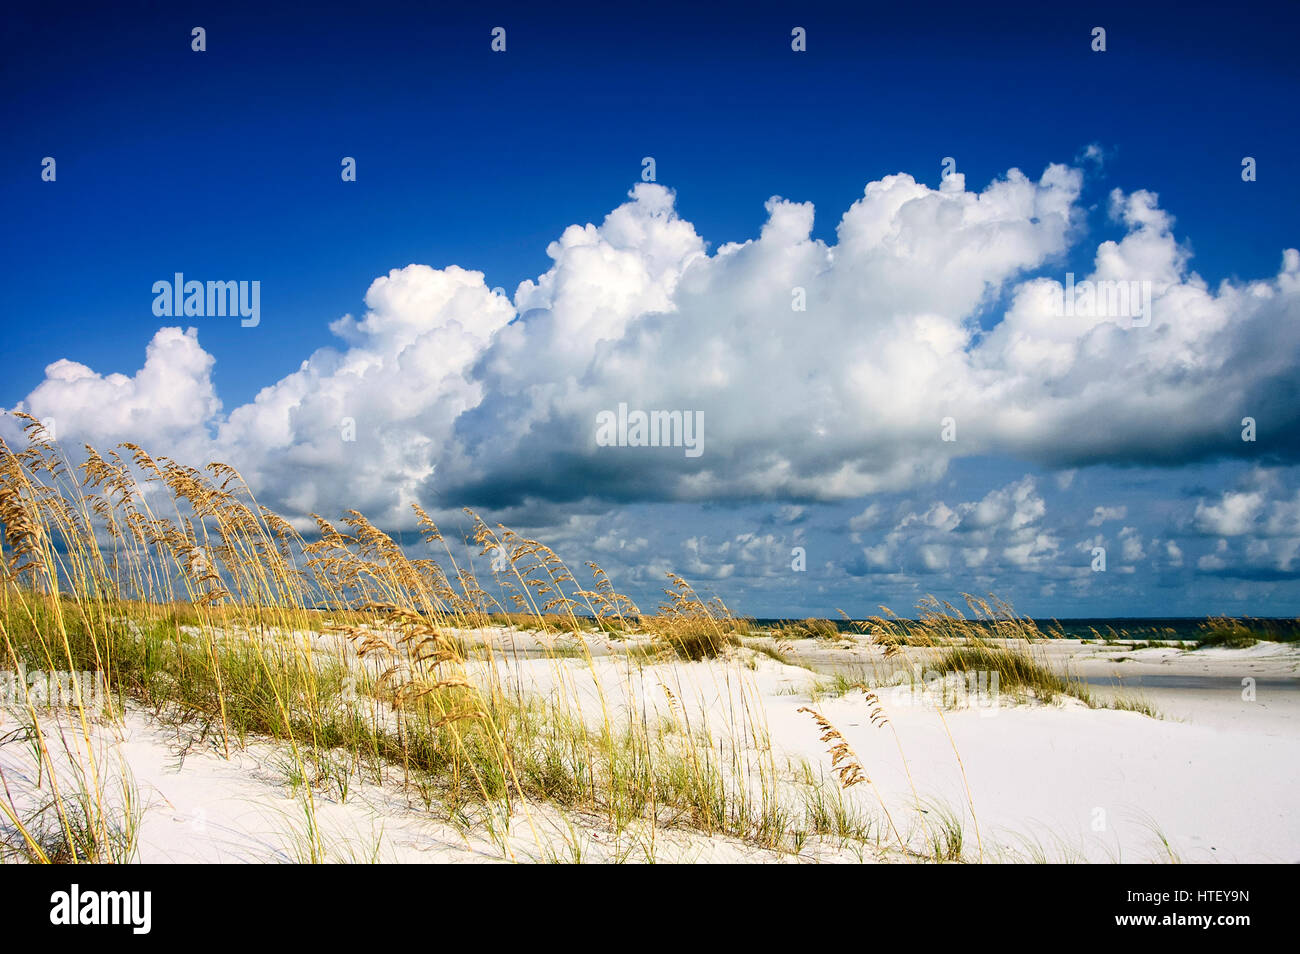 Sea oats and a beautiful white sandy beach. Gulf Coast, Florida. Stock Photo